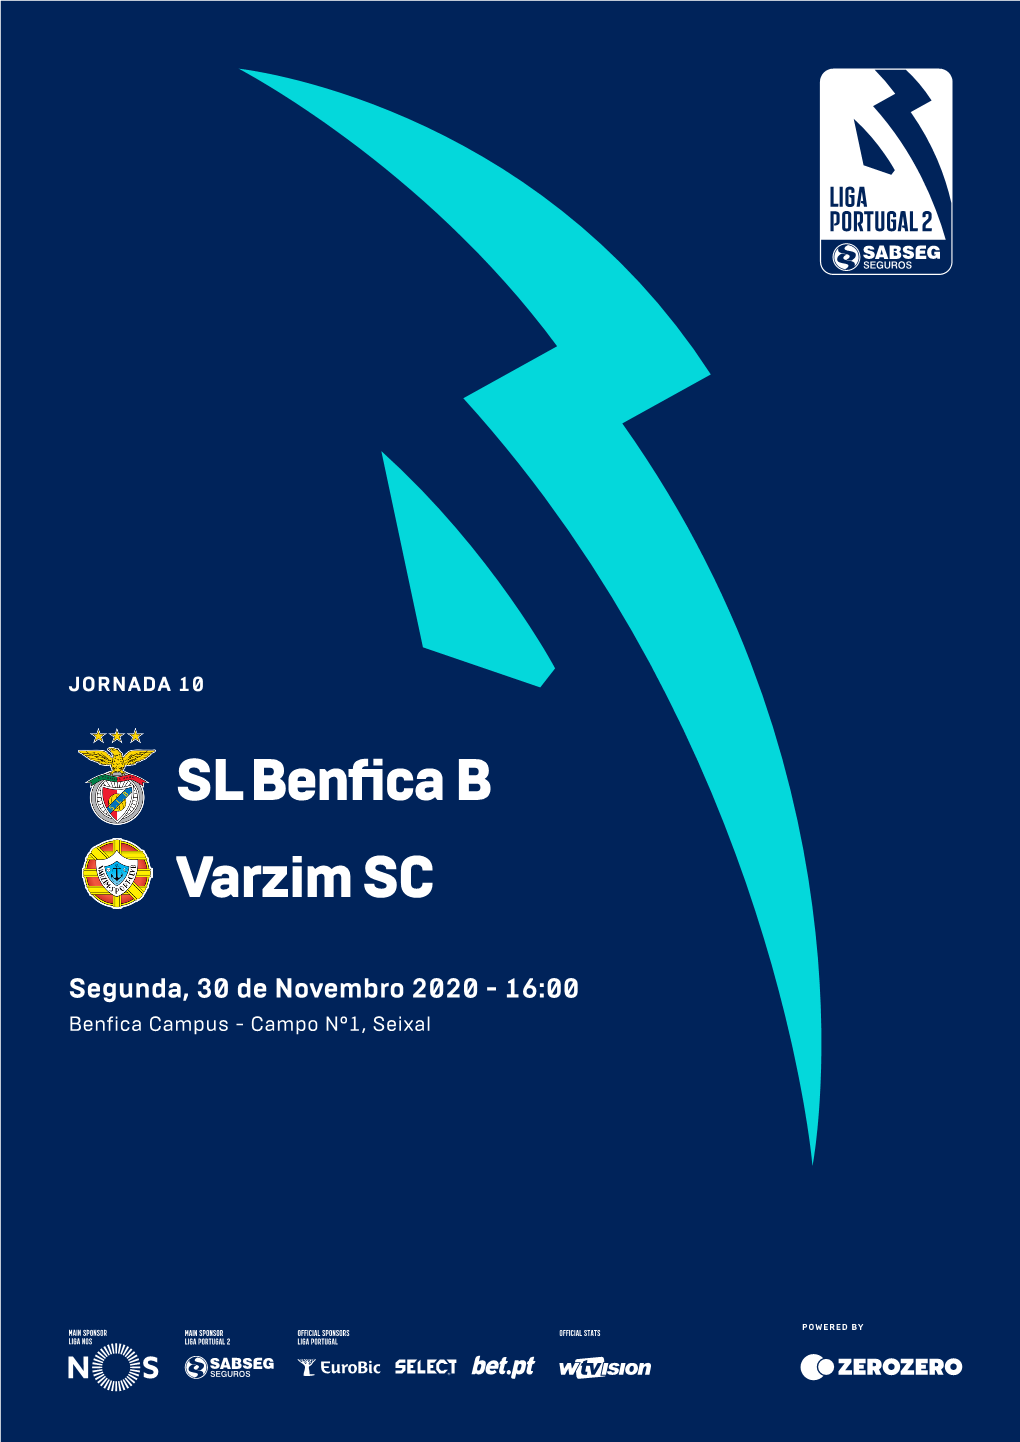 SL Benfica B Varzim SC